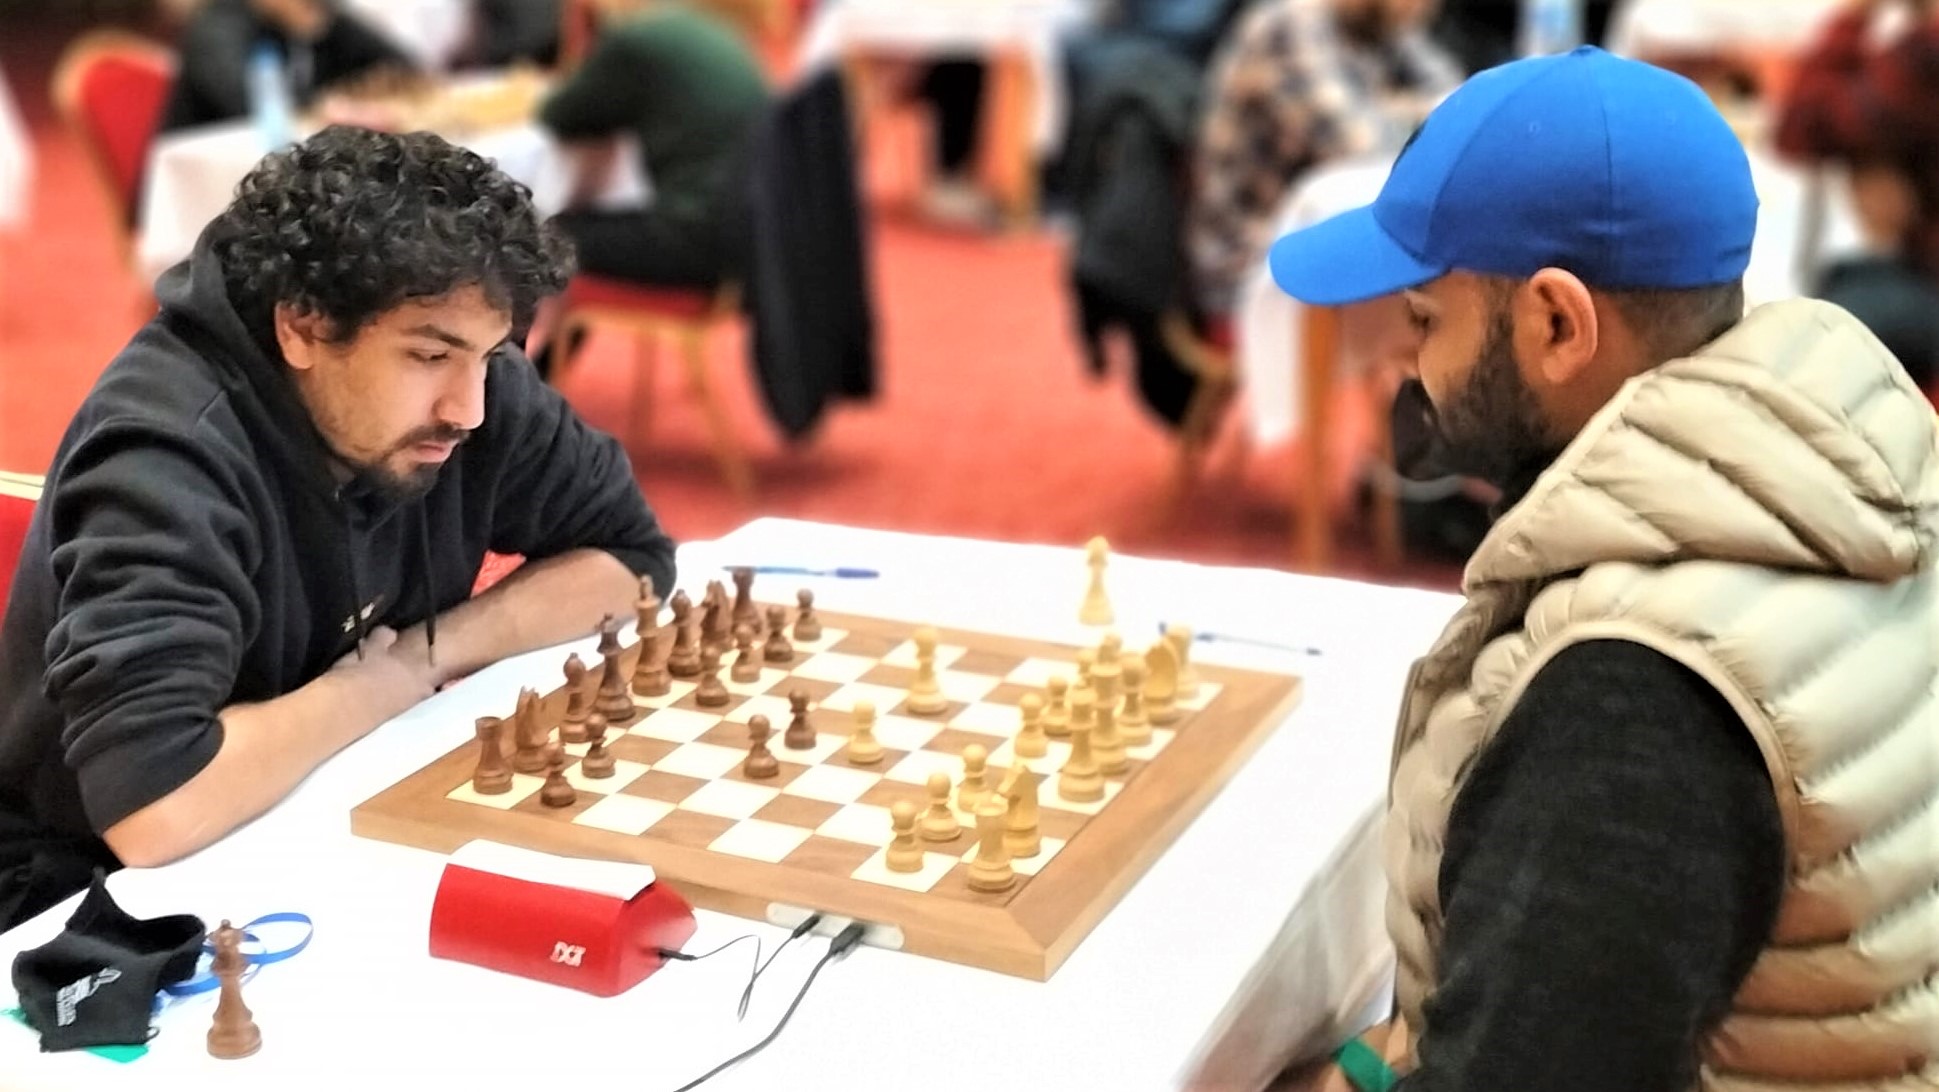 Ilyass Msellek (left) takes on Hamed Ben Ghanem of Tunisia in round 1.